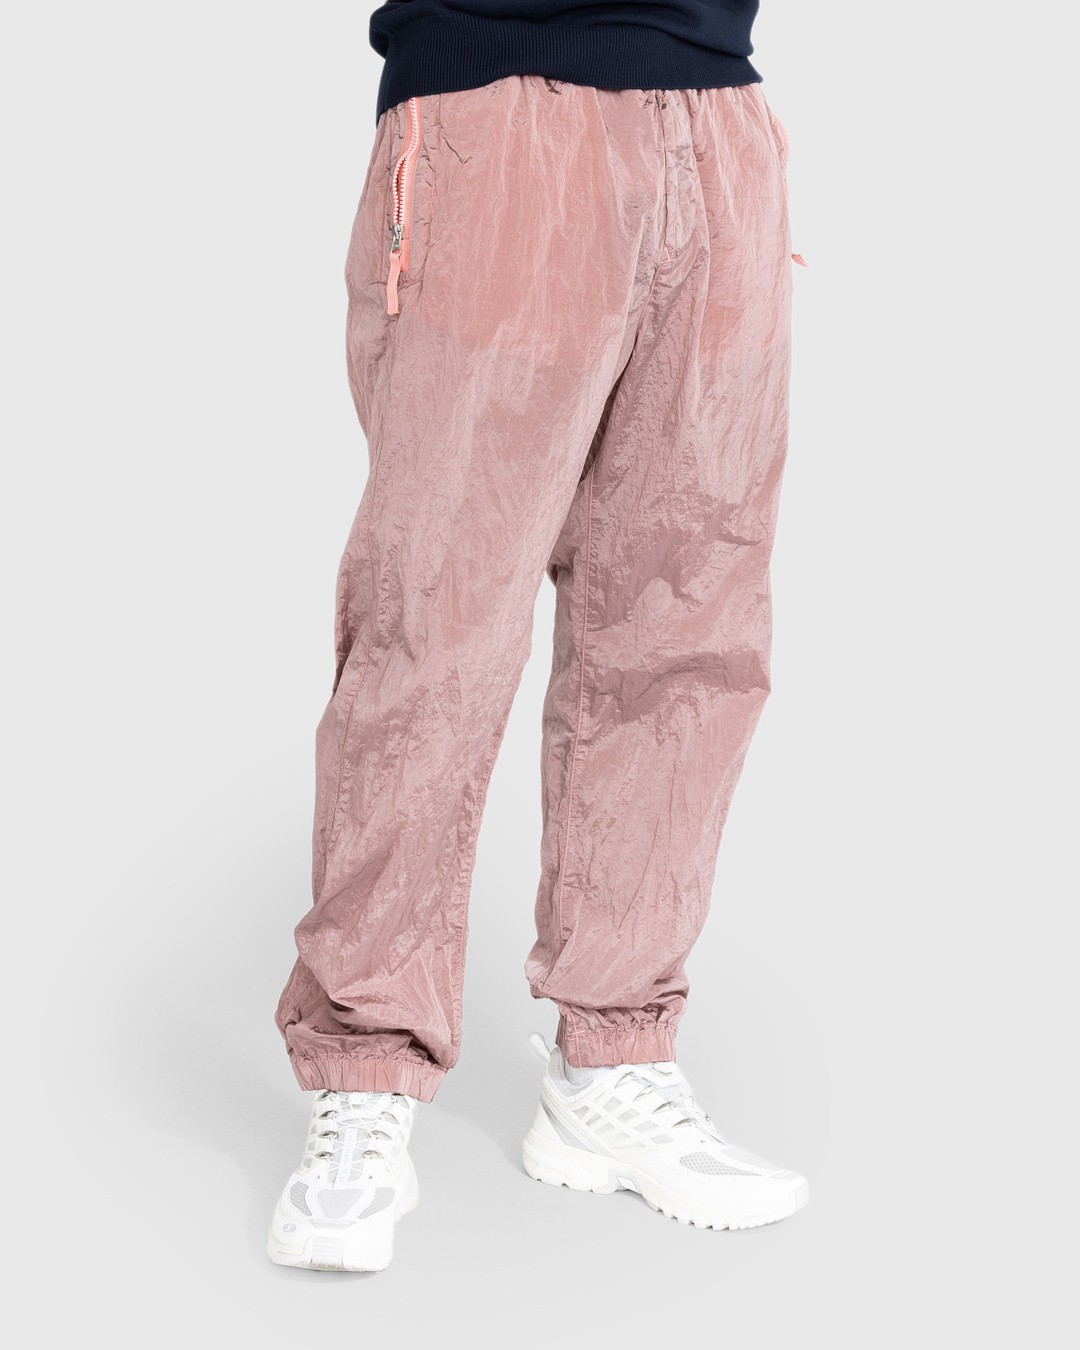 Stone Island – Pantalone Loose Pink 31019 - Pants - Pink - Image 2